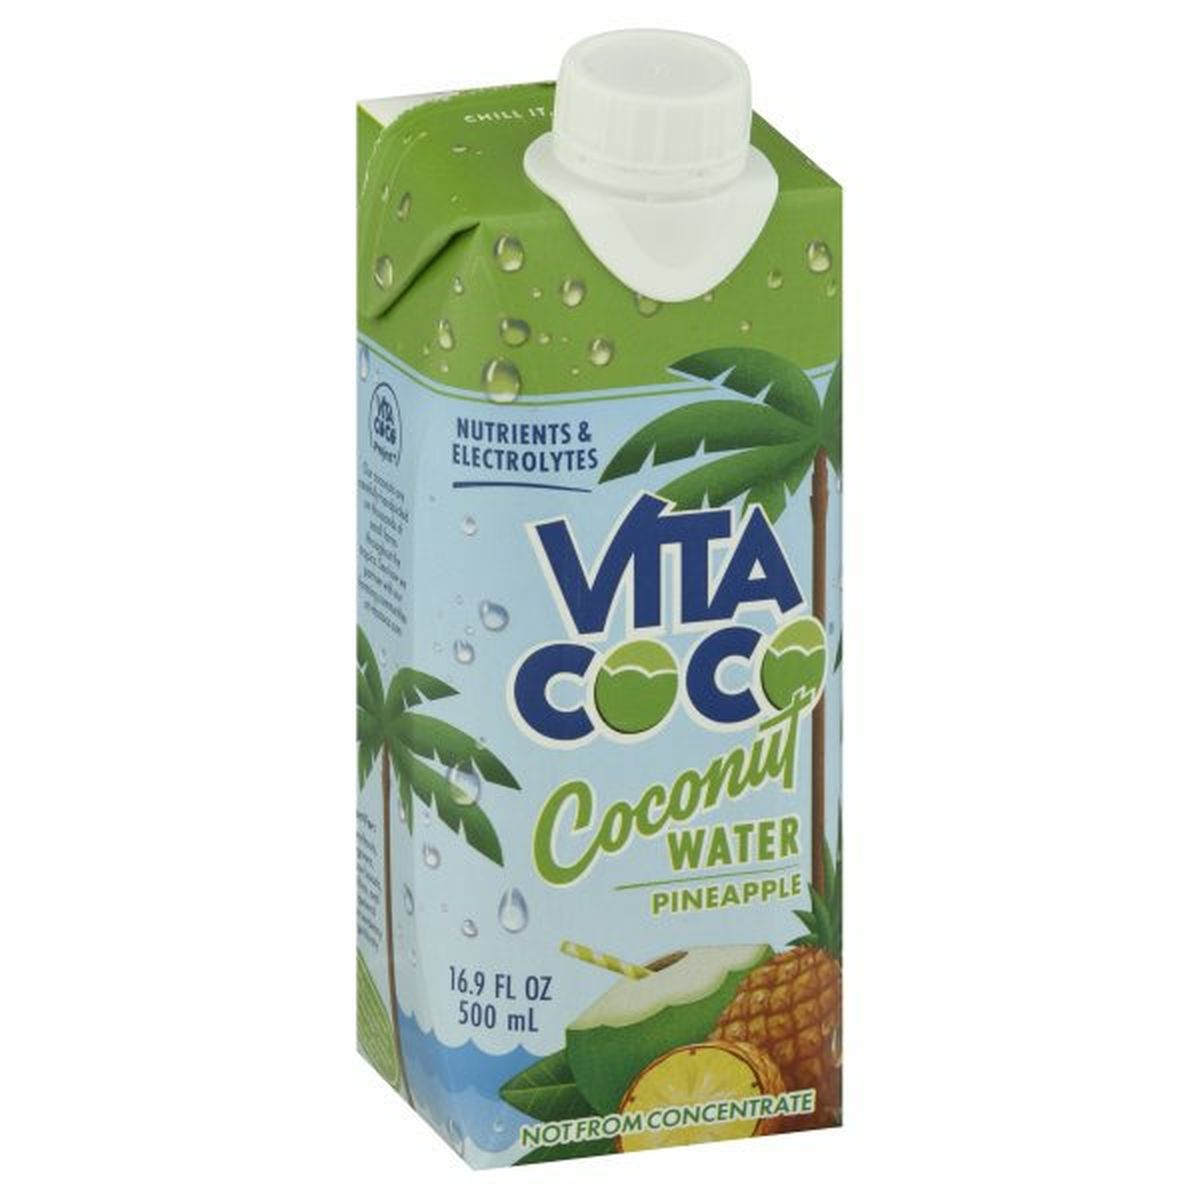 Calories in Vita Coco Coconut Water, Pineapple